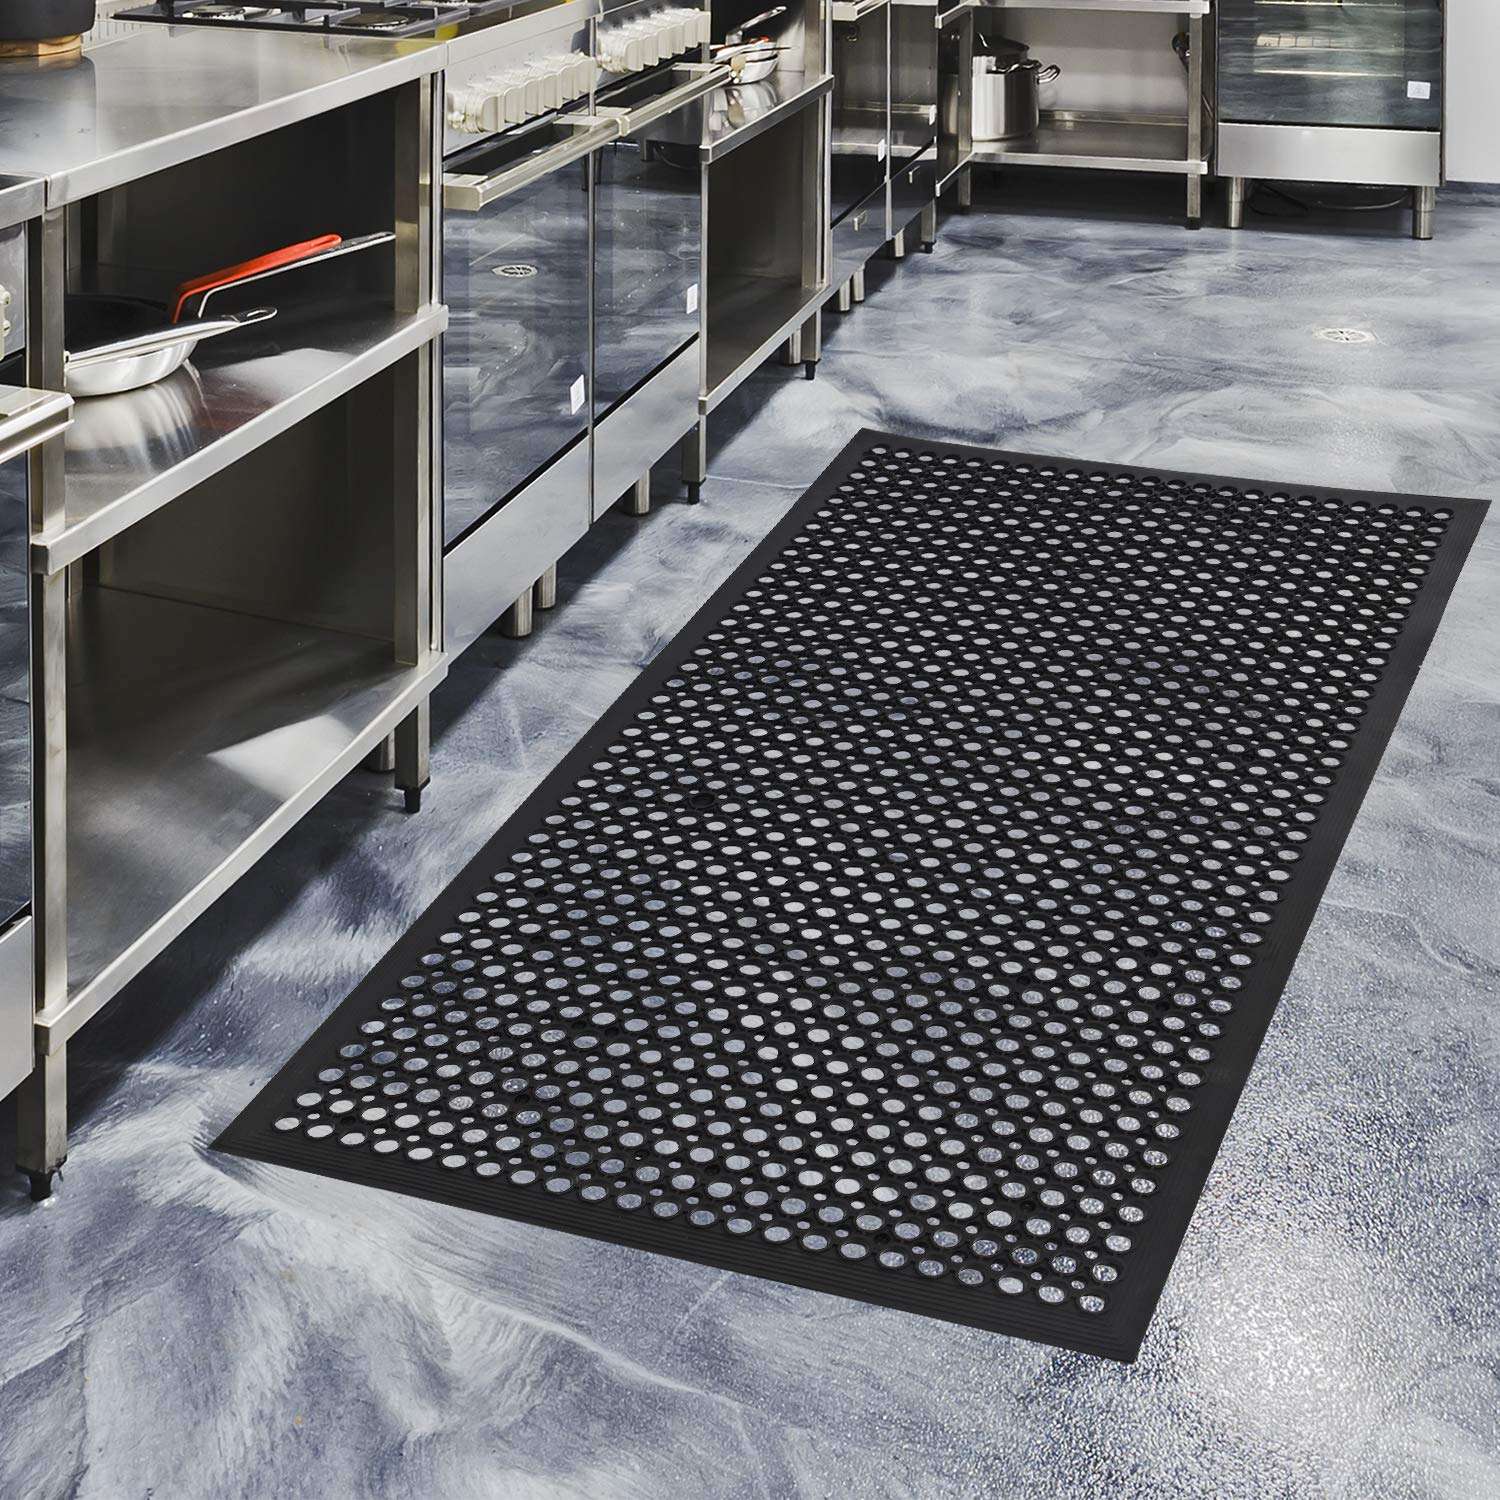 60"  x 36"  Anti Fatigue Mat Restaurant Kitchen Floor Mat Anti